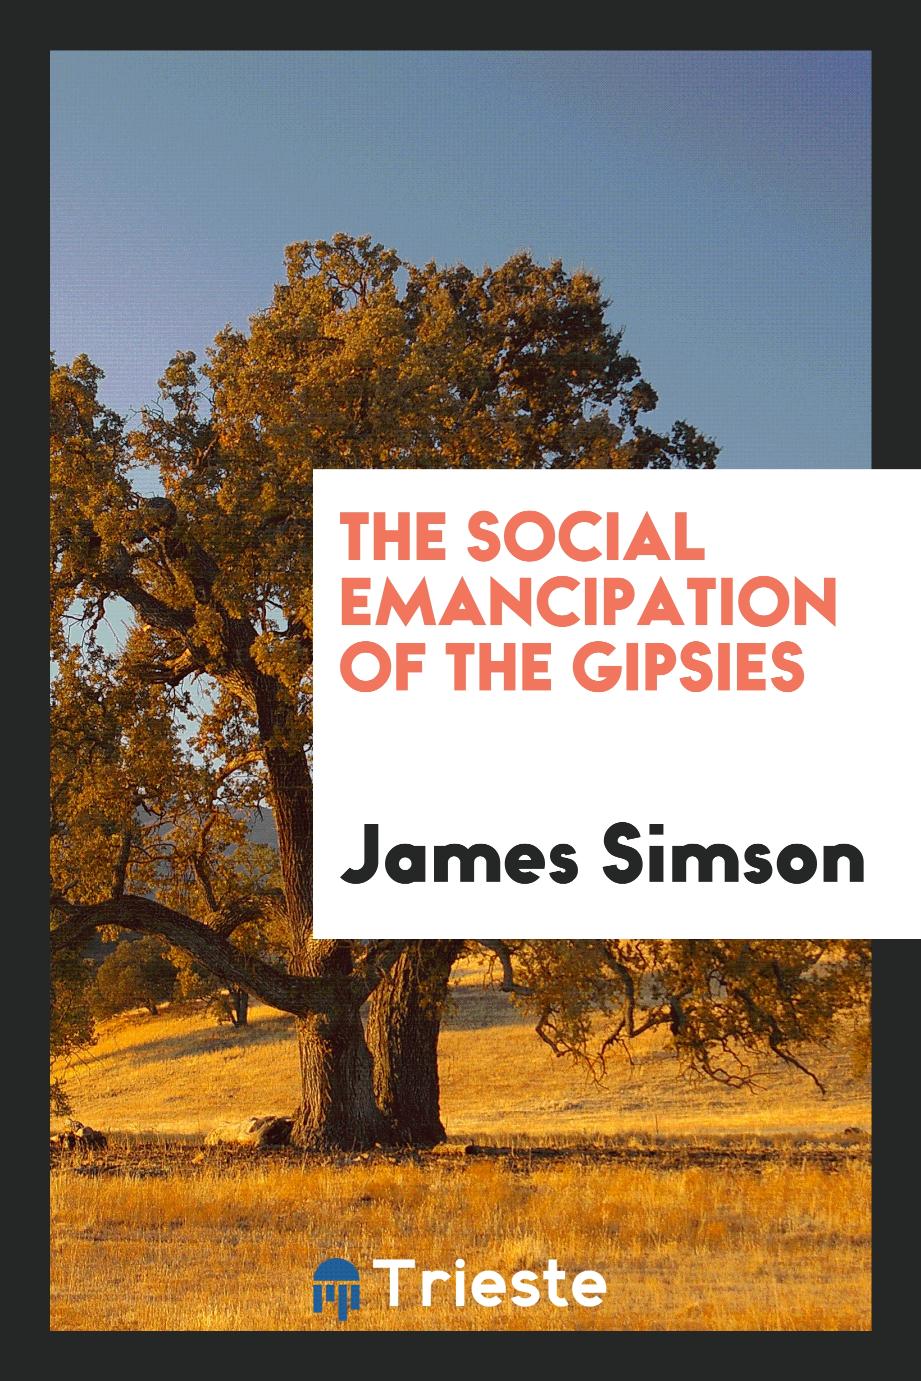 The social emancipation of the Gipsies